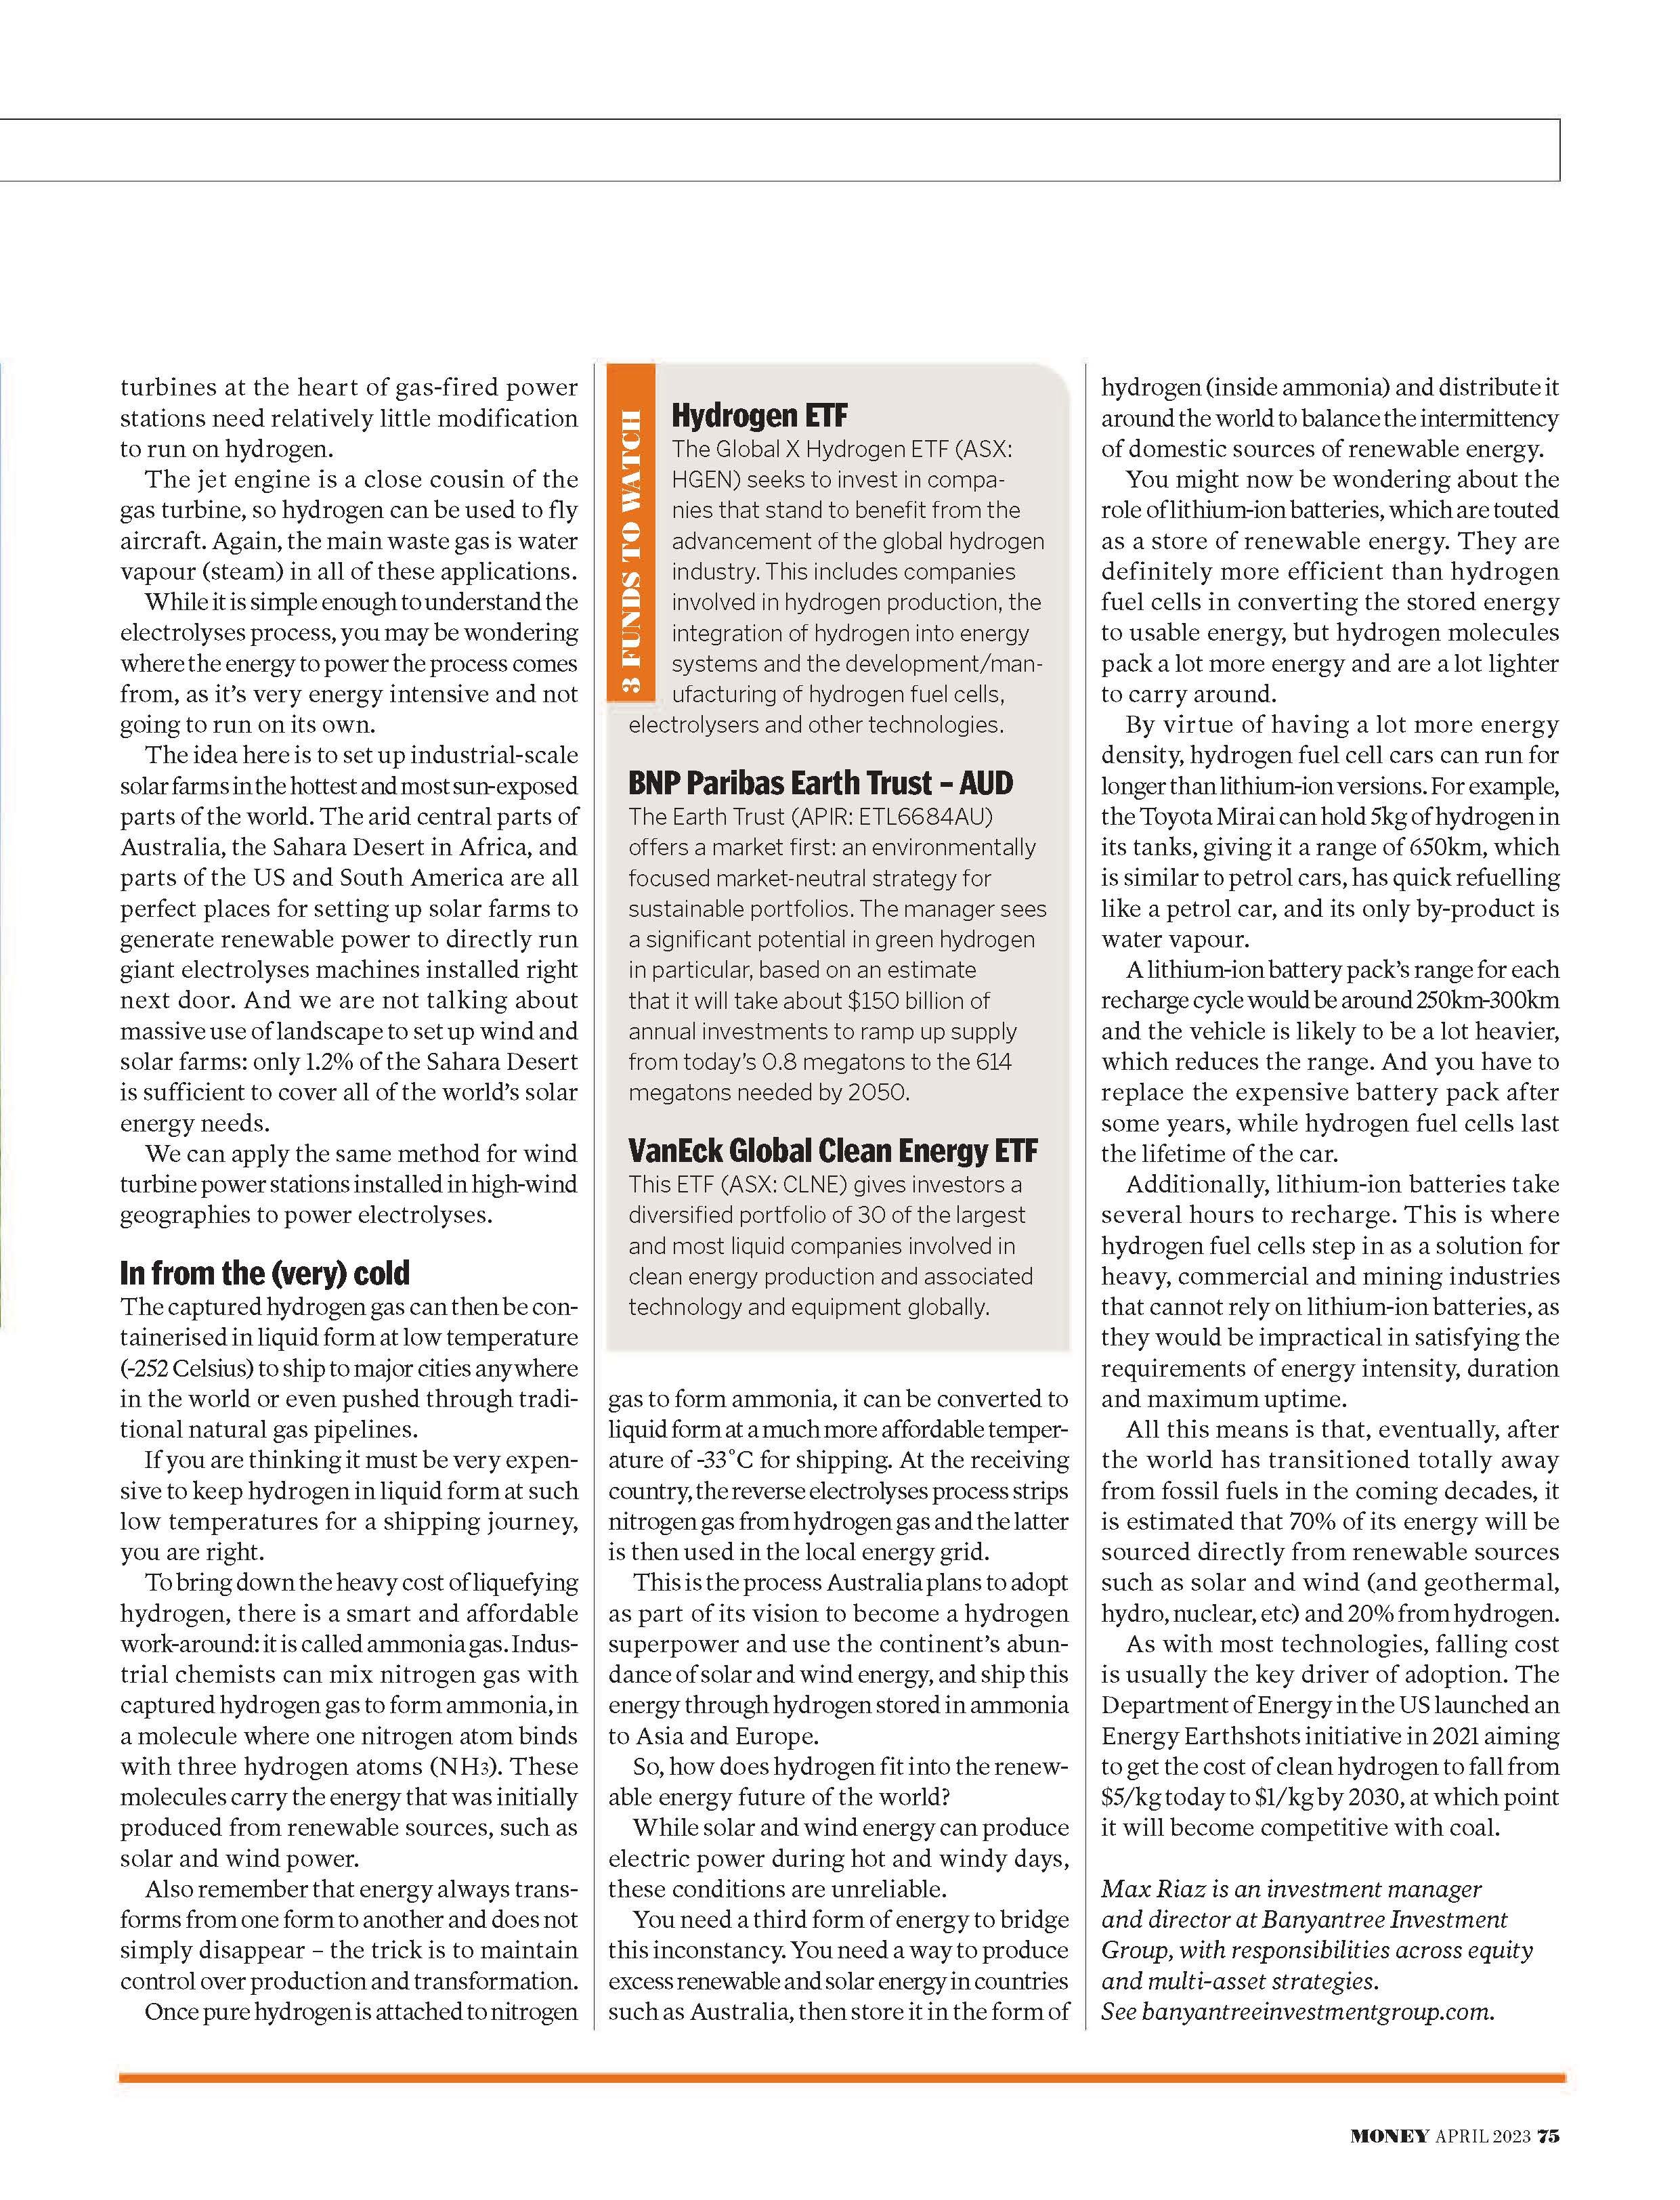 Banyantree-Money Magazine (April 2023)_Page_3.jpg